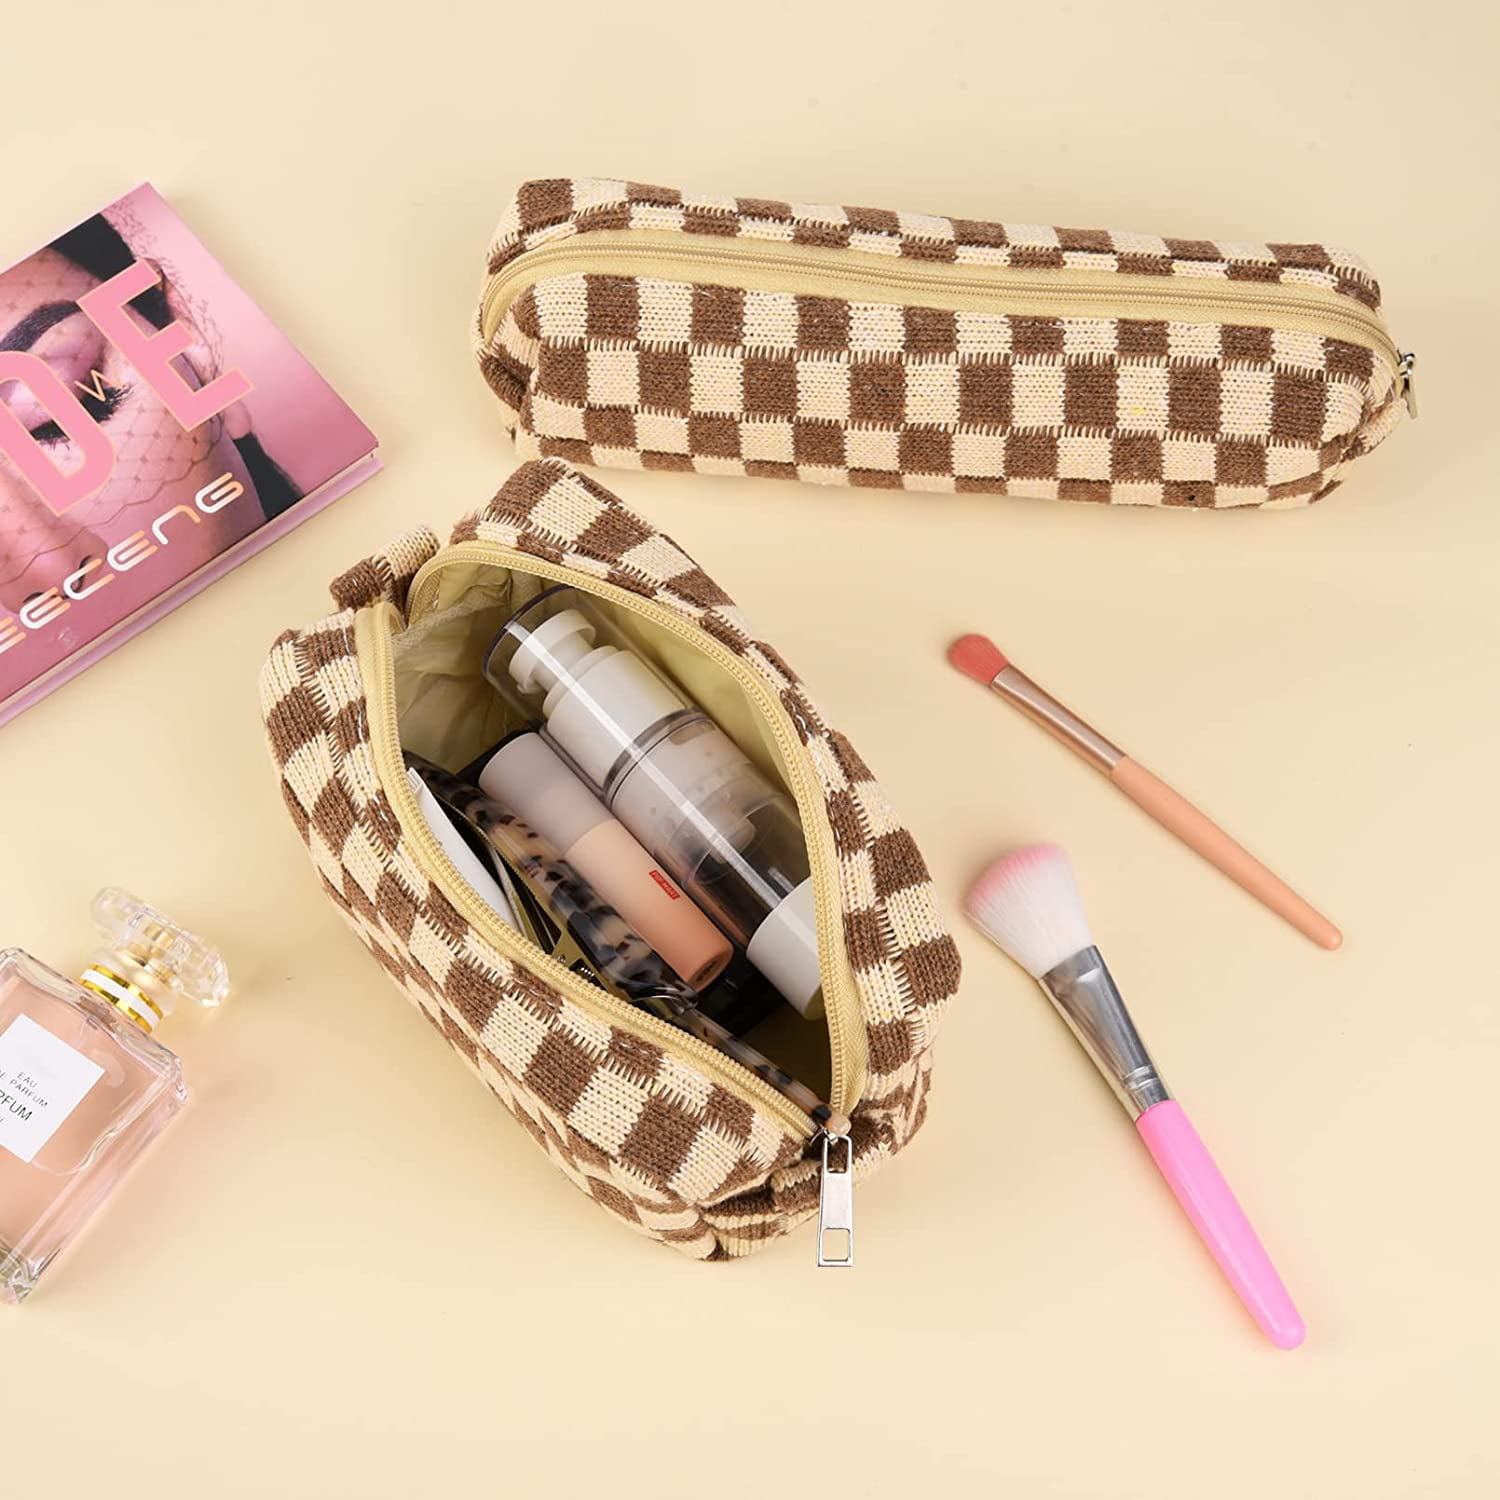 Lumento Black Checkered Makeup Bag,Travel Storage Cosmetic Bag,PU